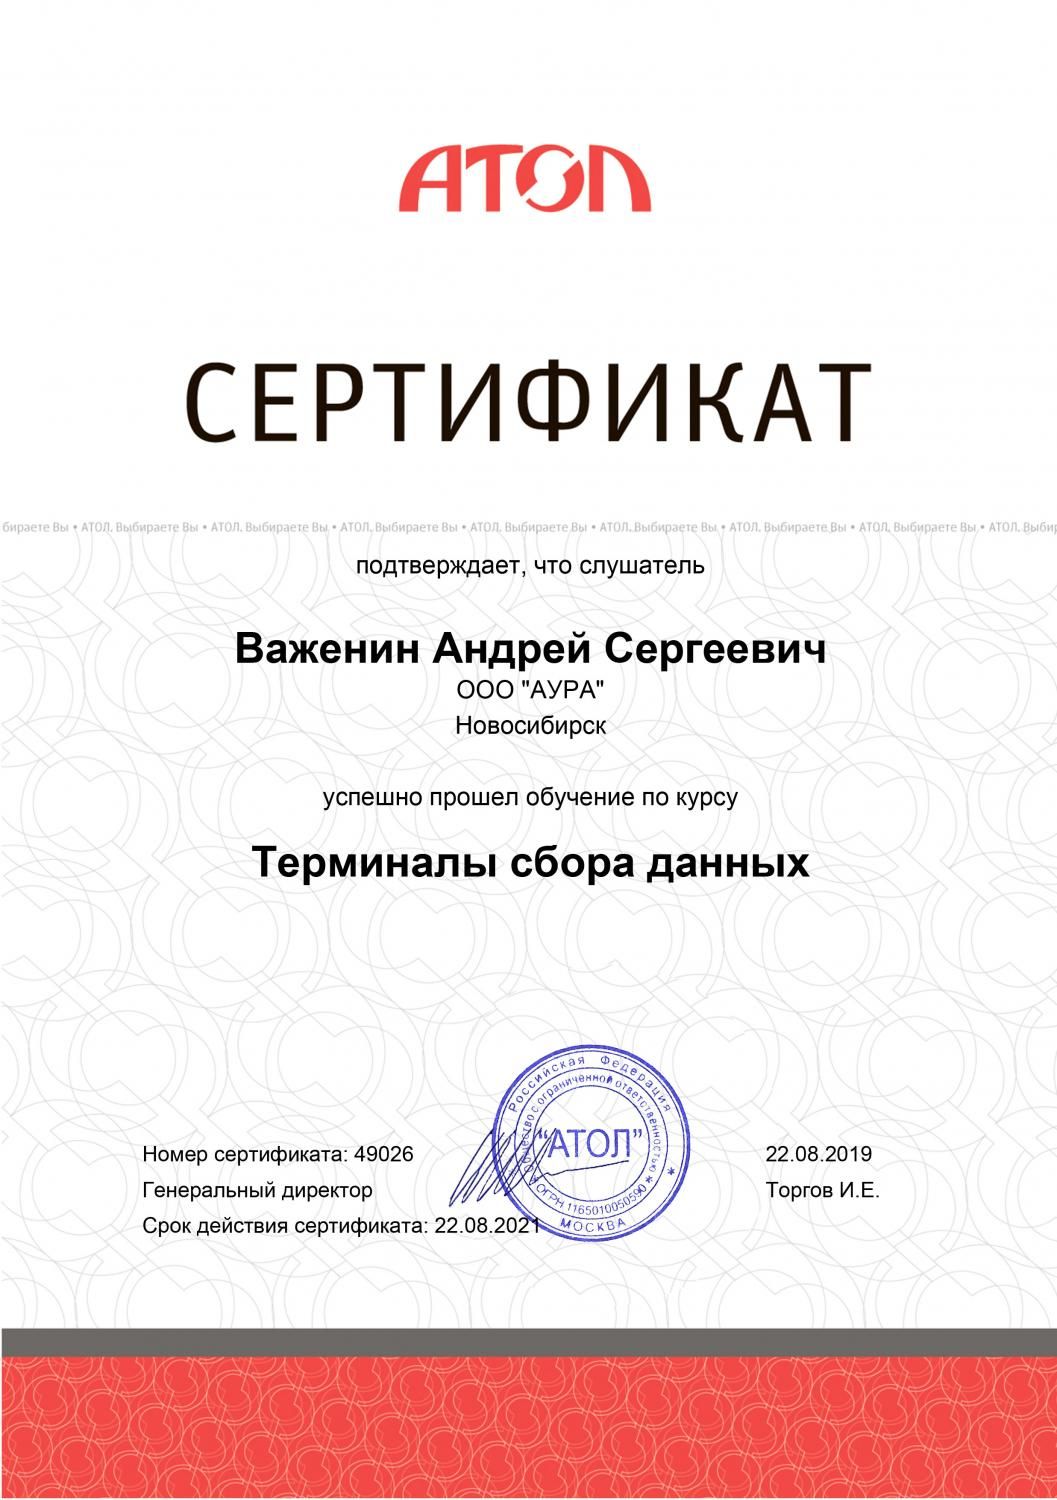 Сертификат по курсу ТСД АТОЛ фото AuTrade.ru